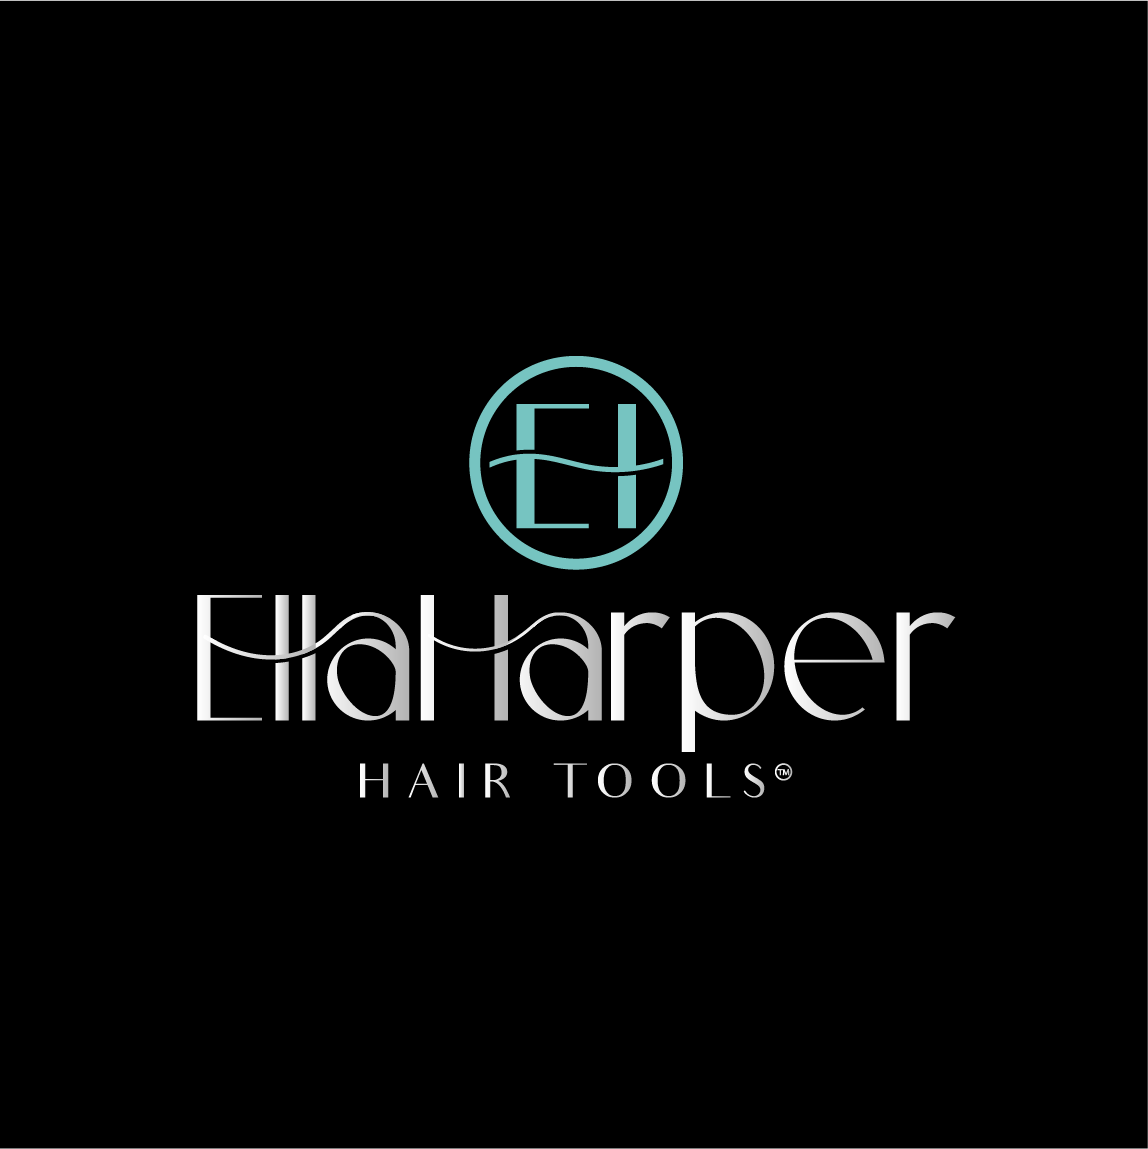 EllaHarper Hair Tools LLC